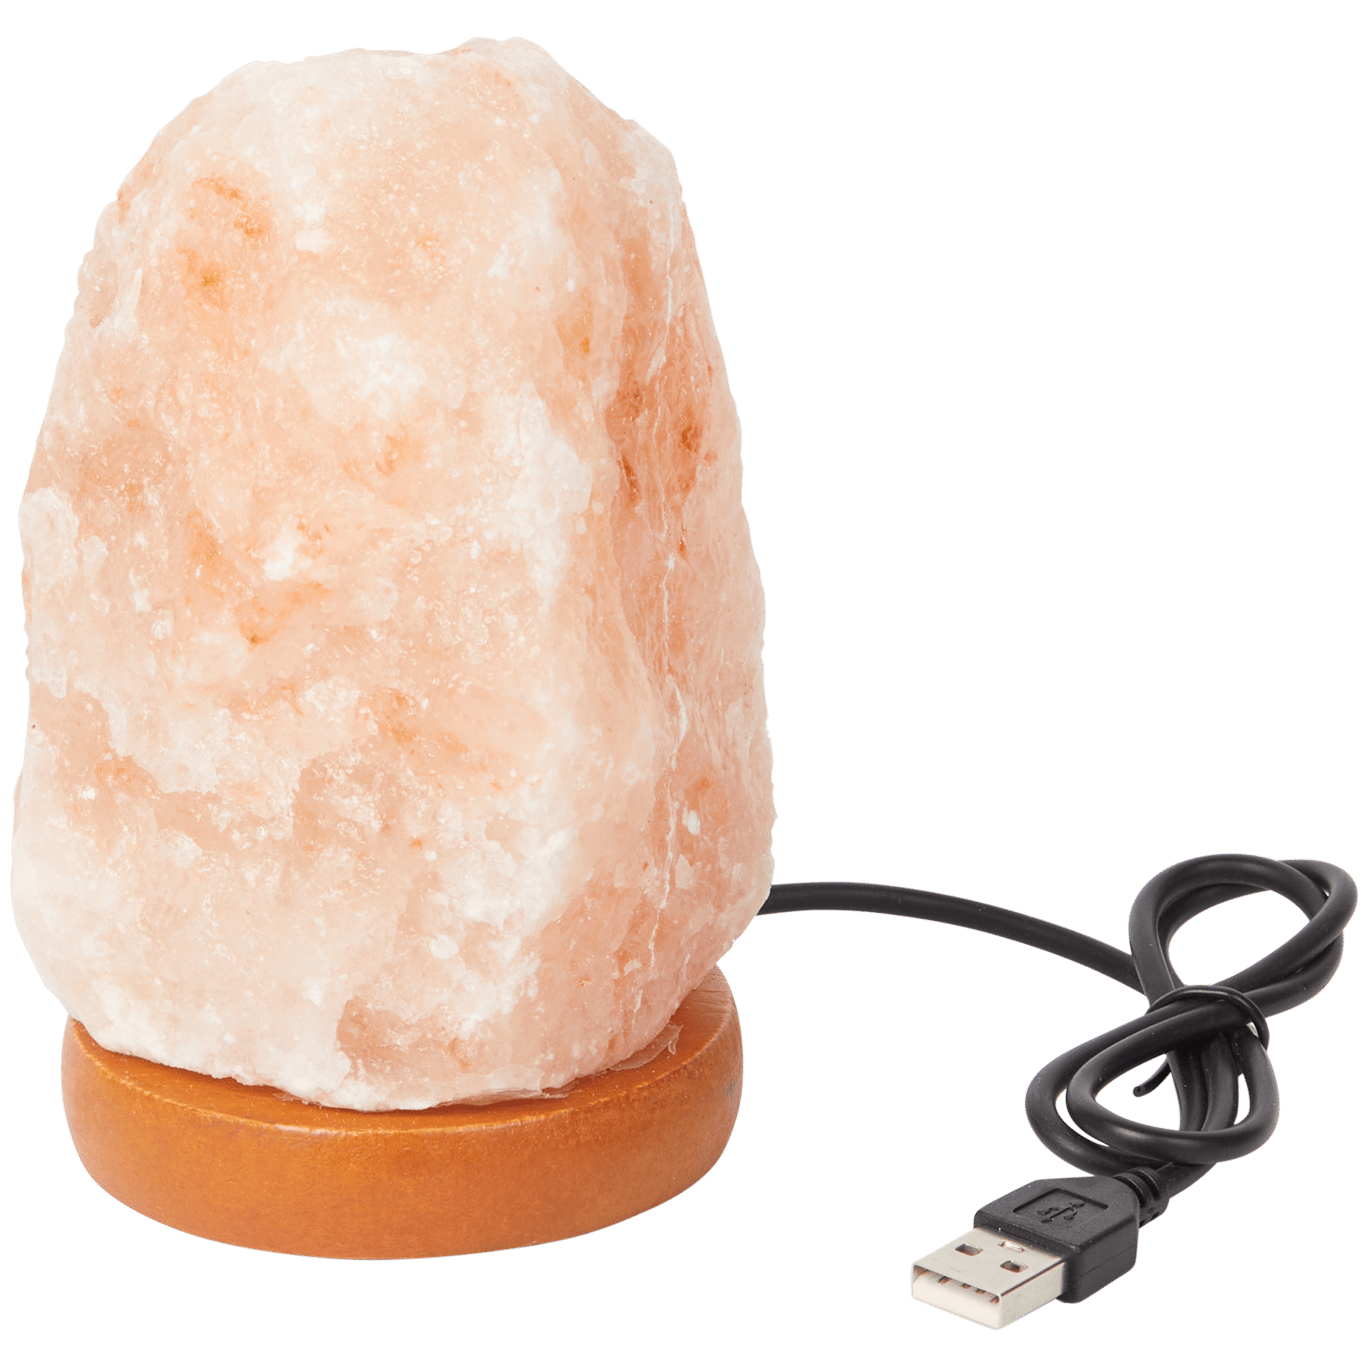 Himalájska lampa zo soľného kameňa Deluxa